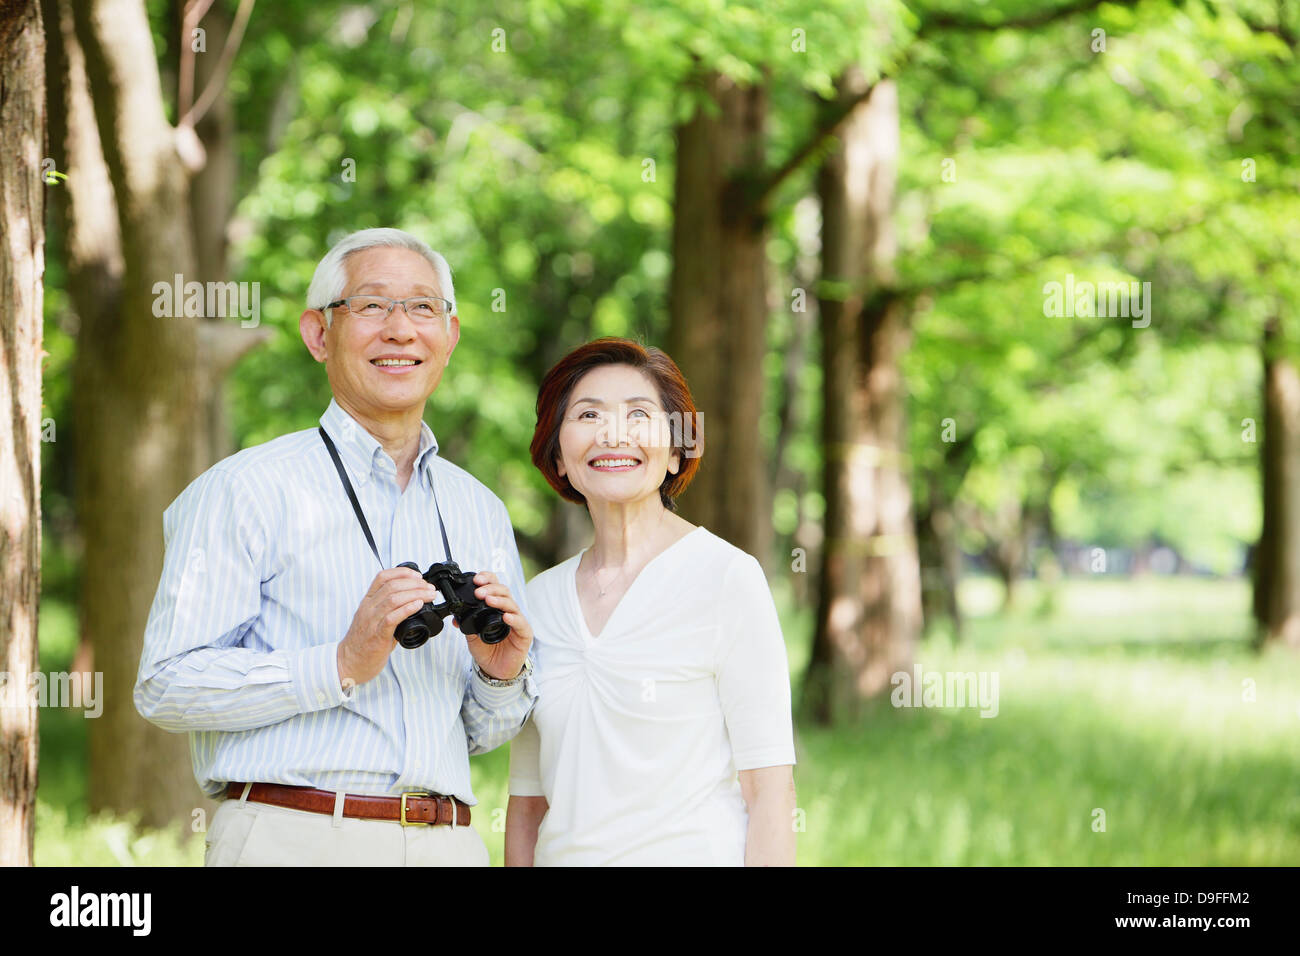 Senior couple with binoculars smiling away Stock Photo